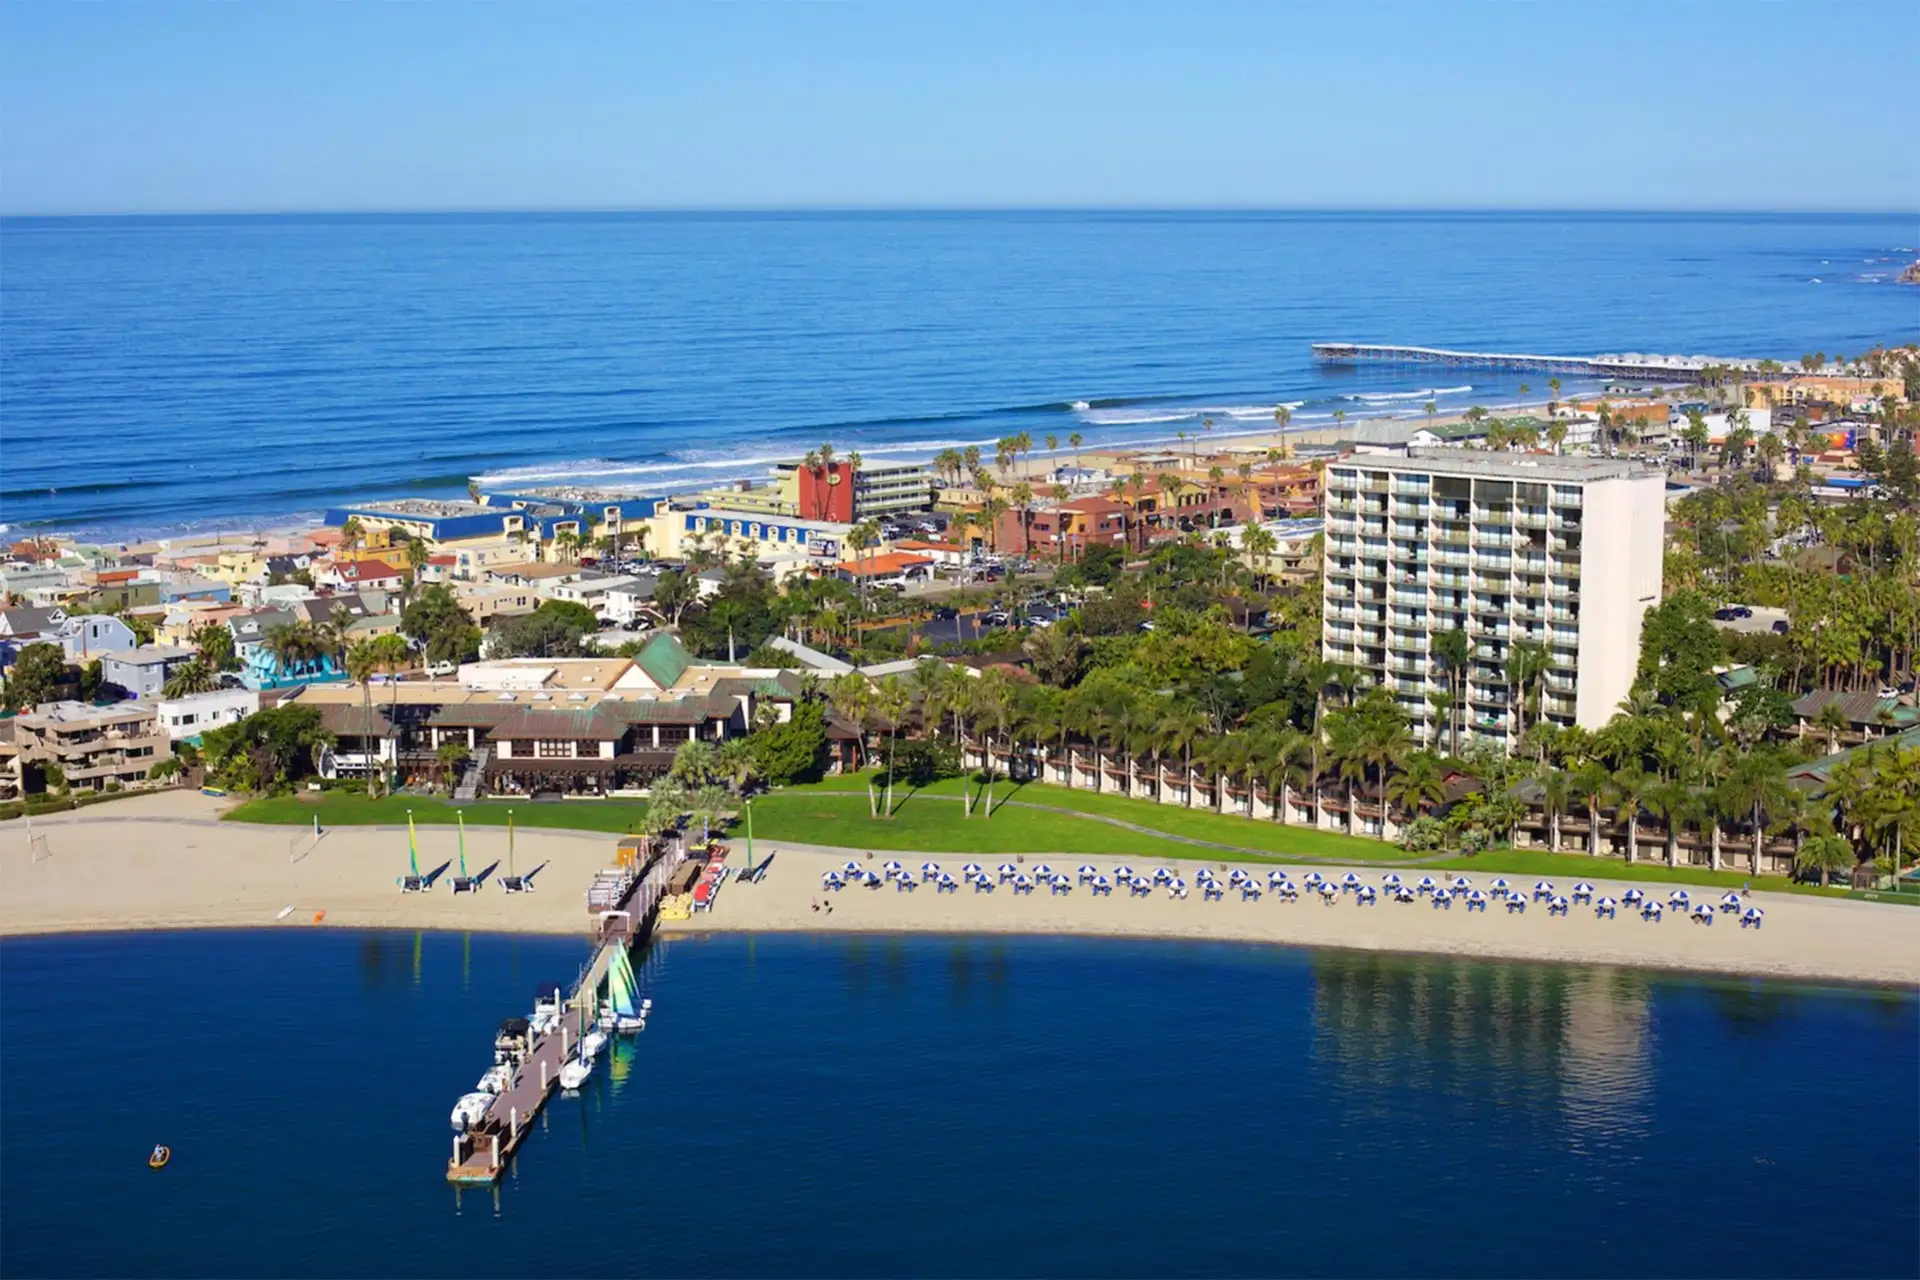 Catamaran Resort Hotel and Spa in San Diego, California